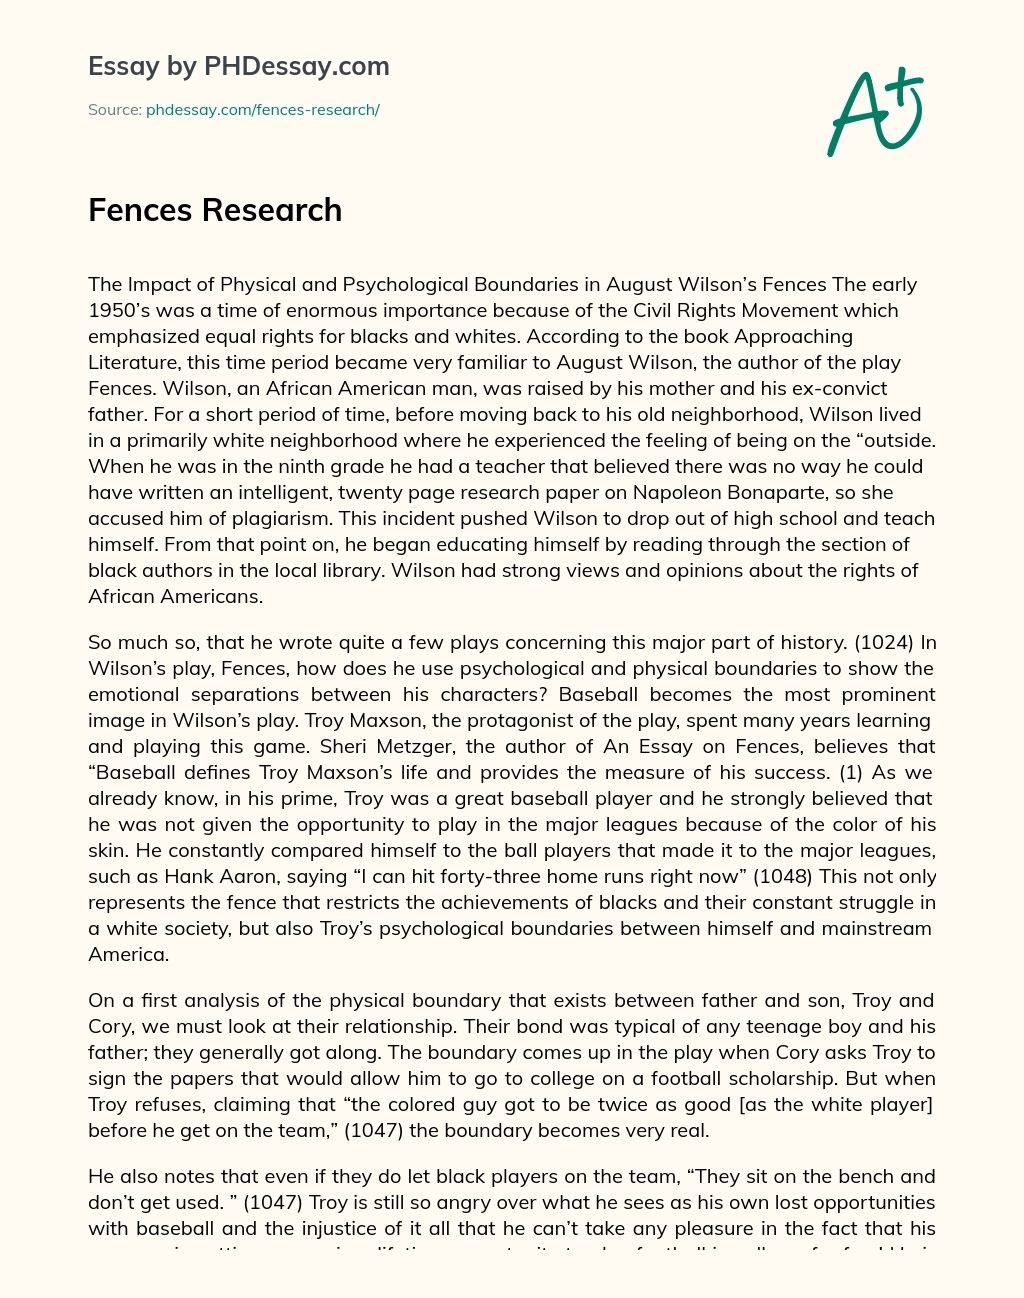 Fences Research essay